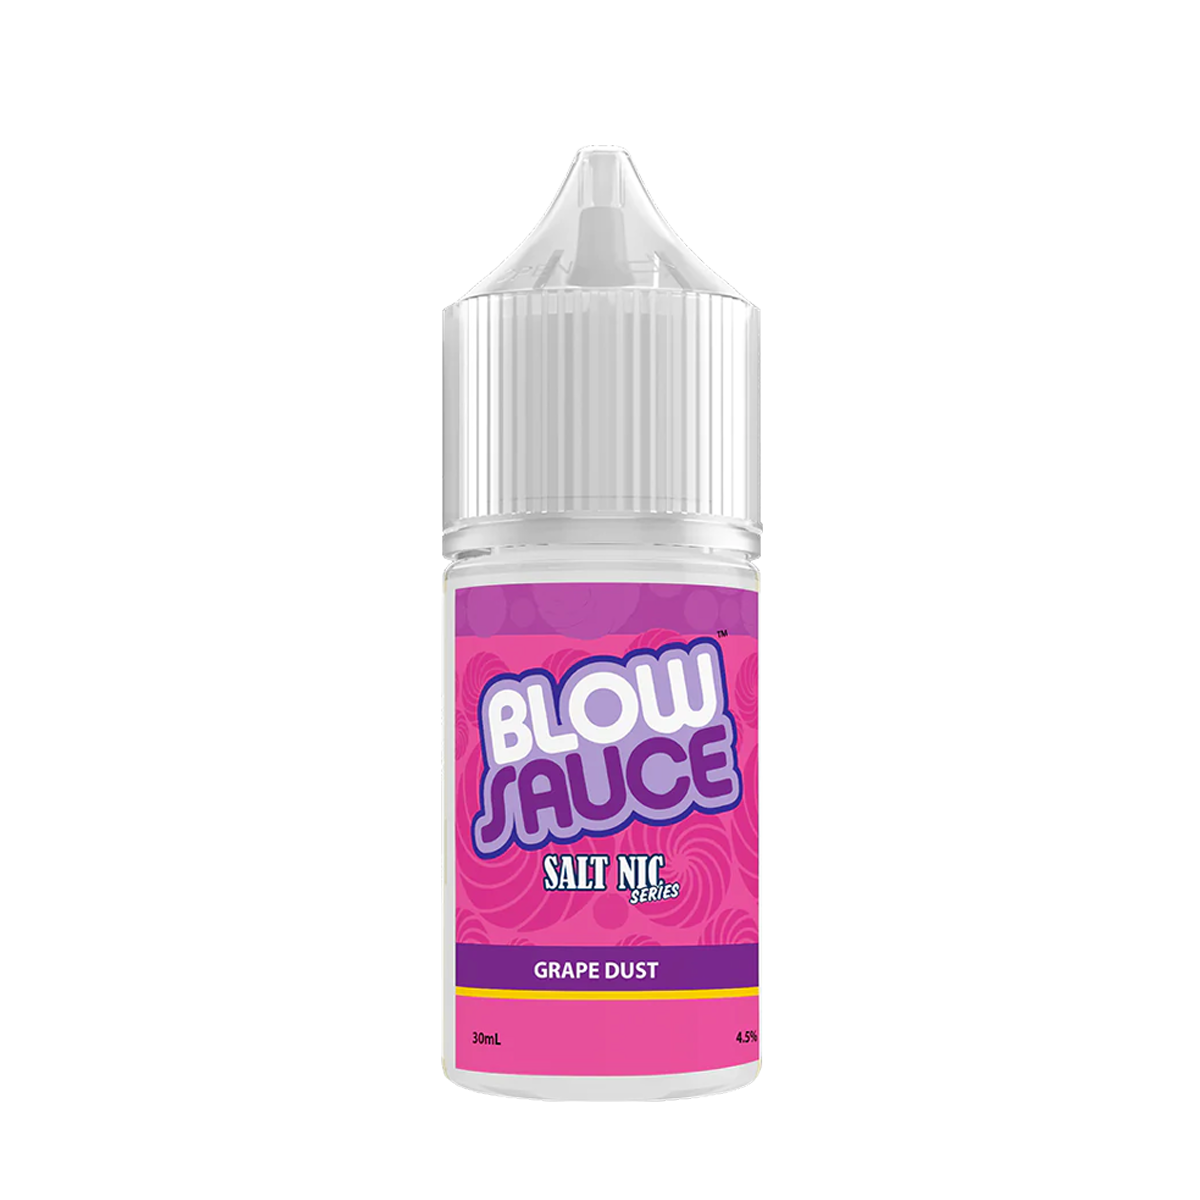 Suorin Blow Sauce Salt Nicotine Vape Juice 45 Mg 30 ml Grape Dust